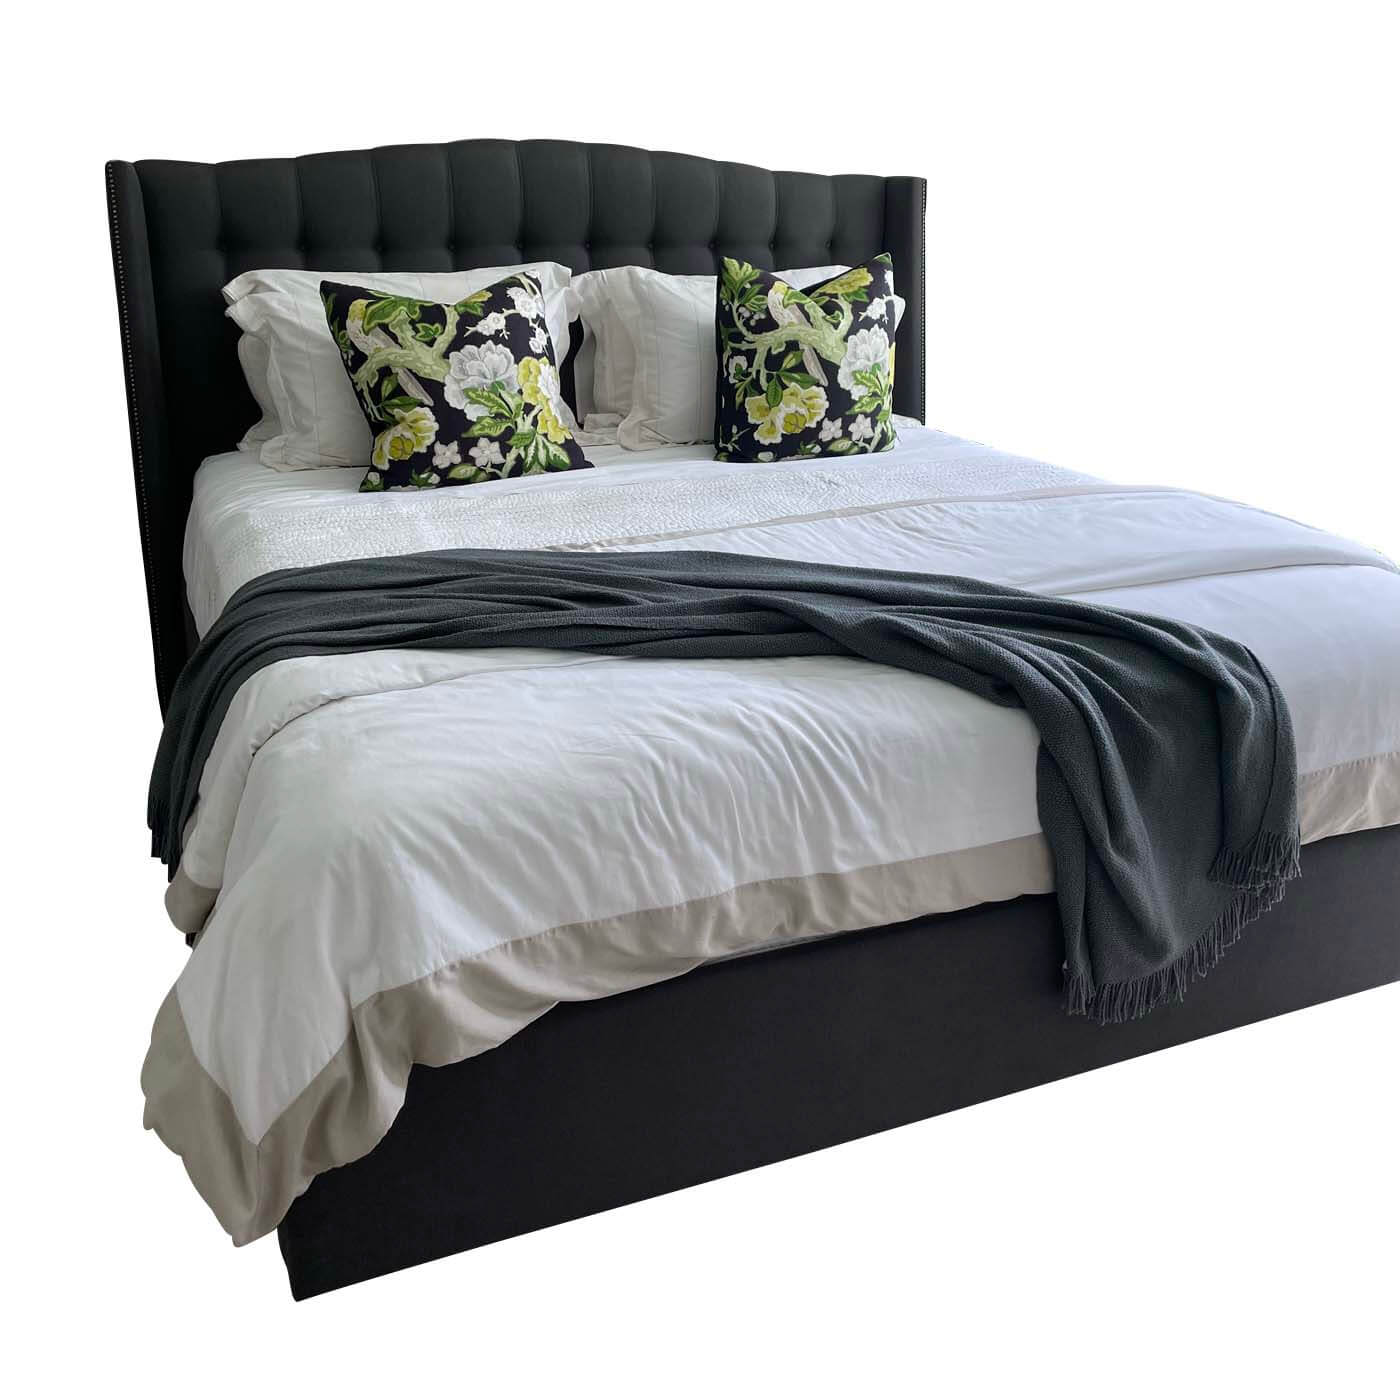 Heatherley Design Hamptons style king bed